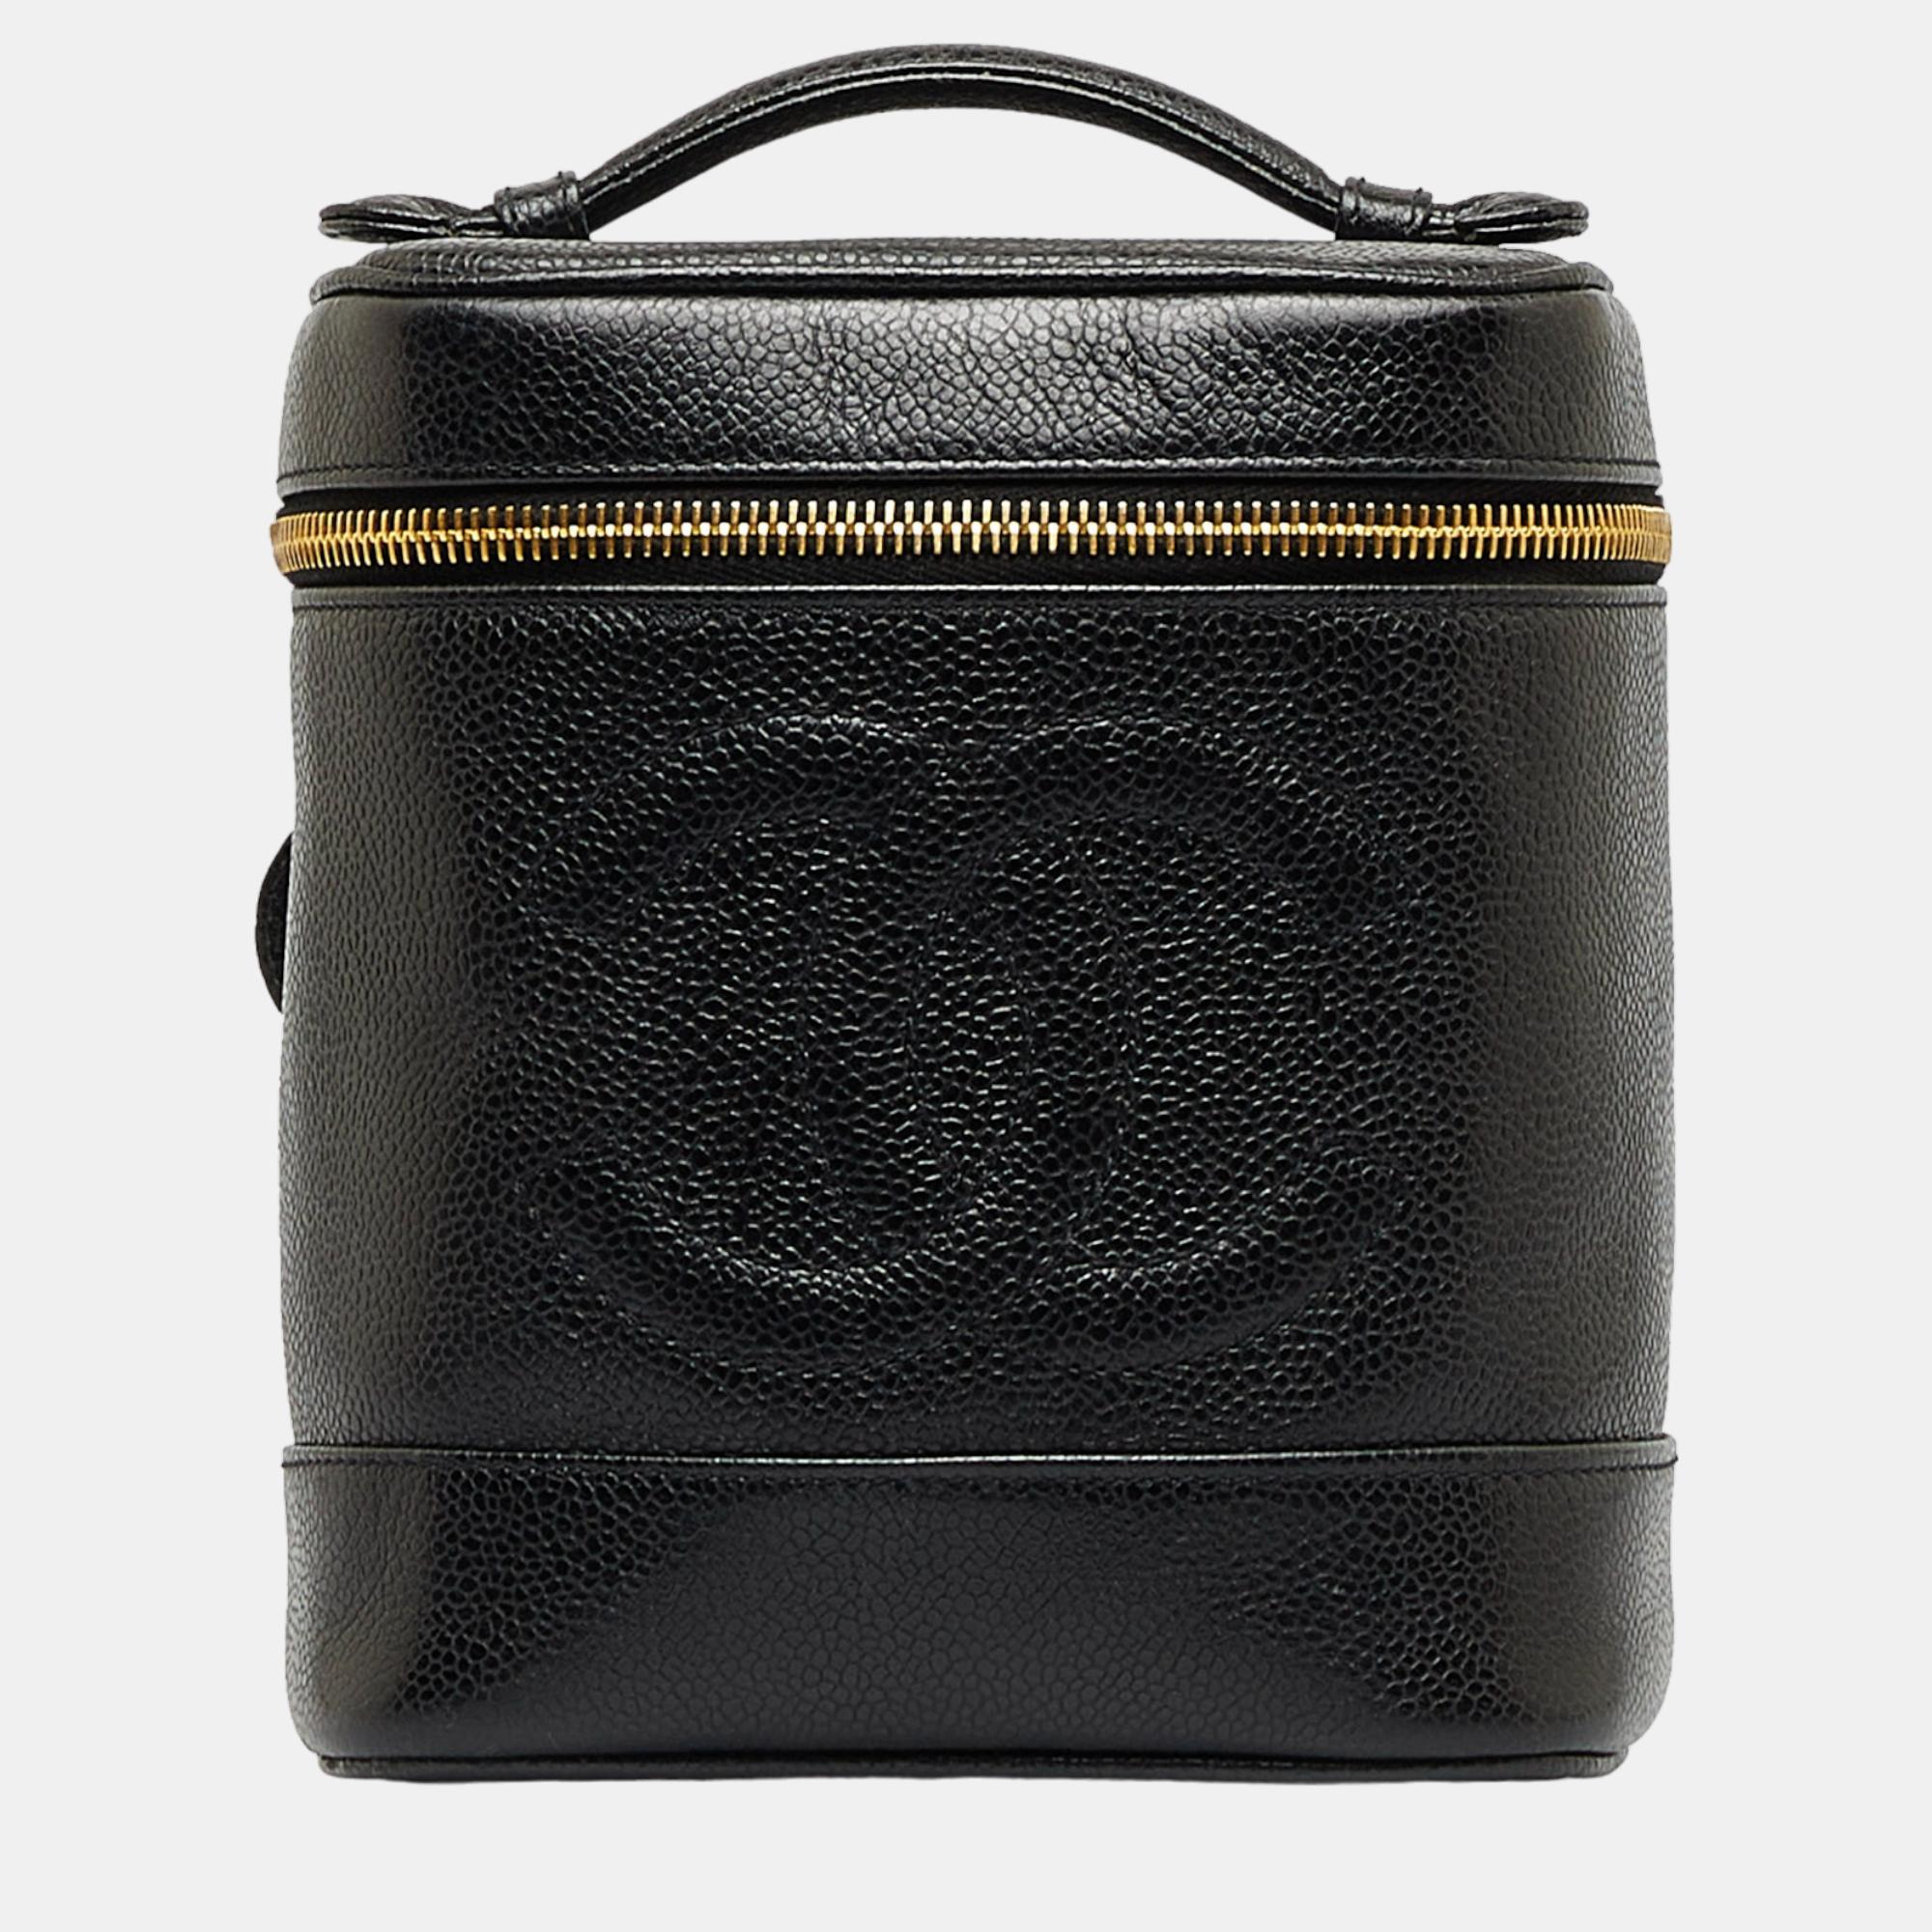 Chanel Black CC Caviar Vanity Bag